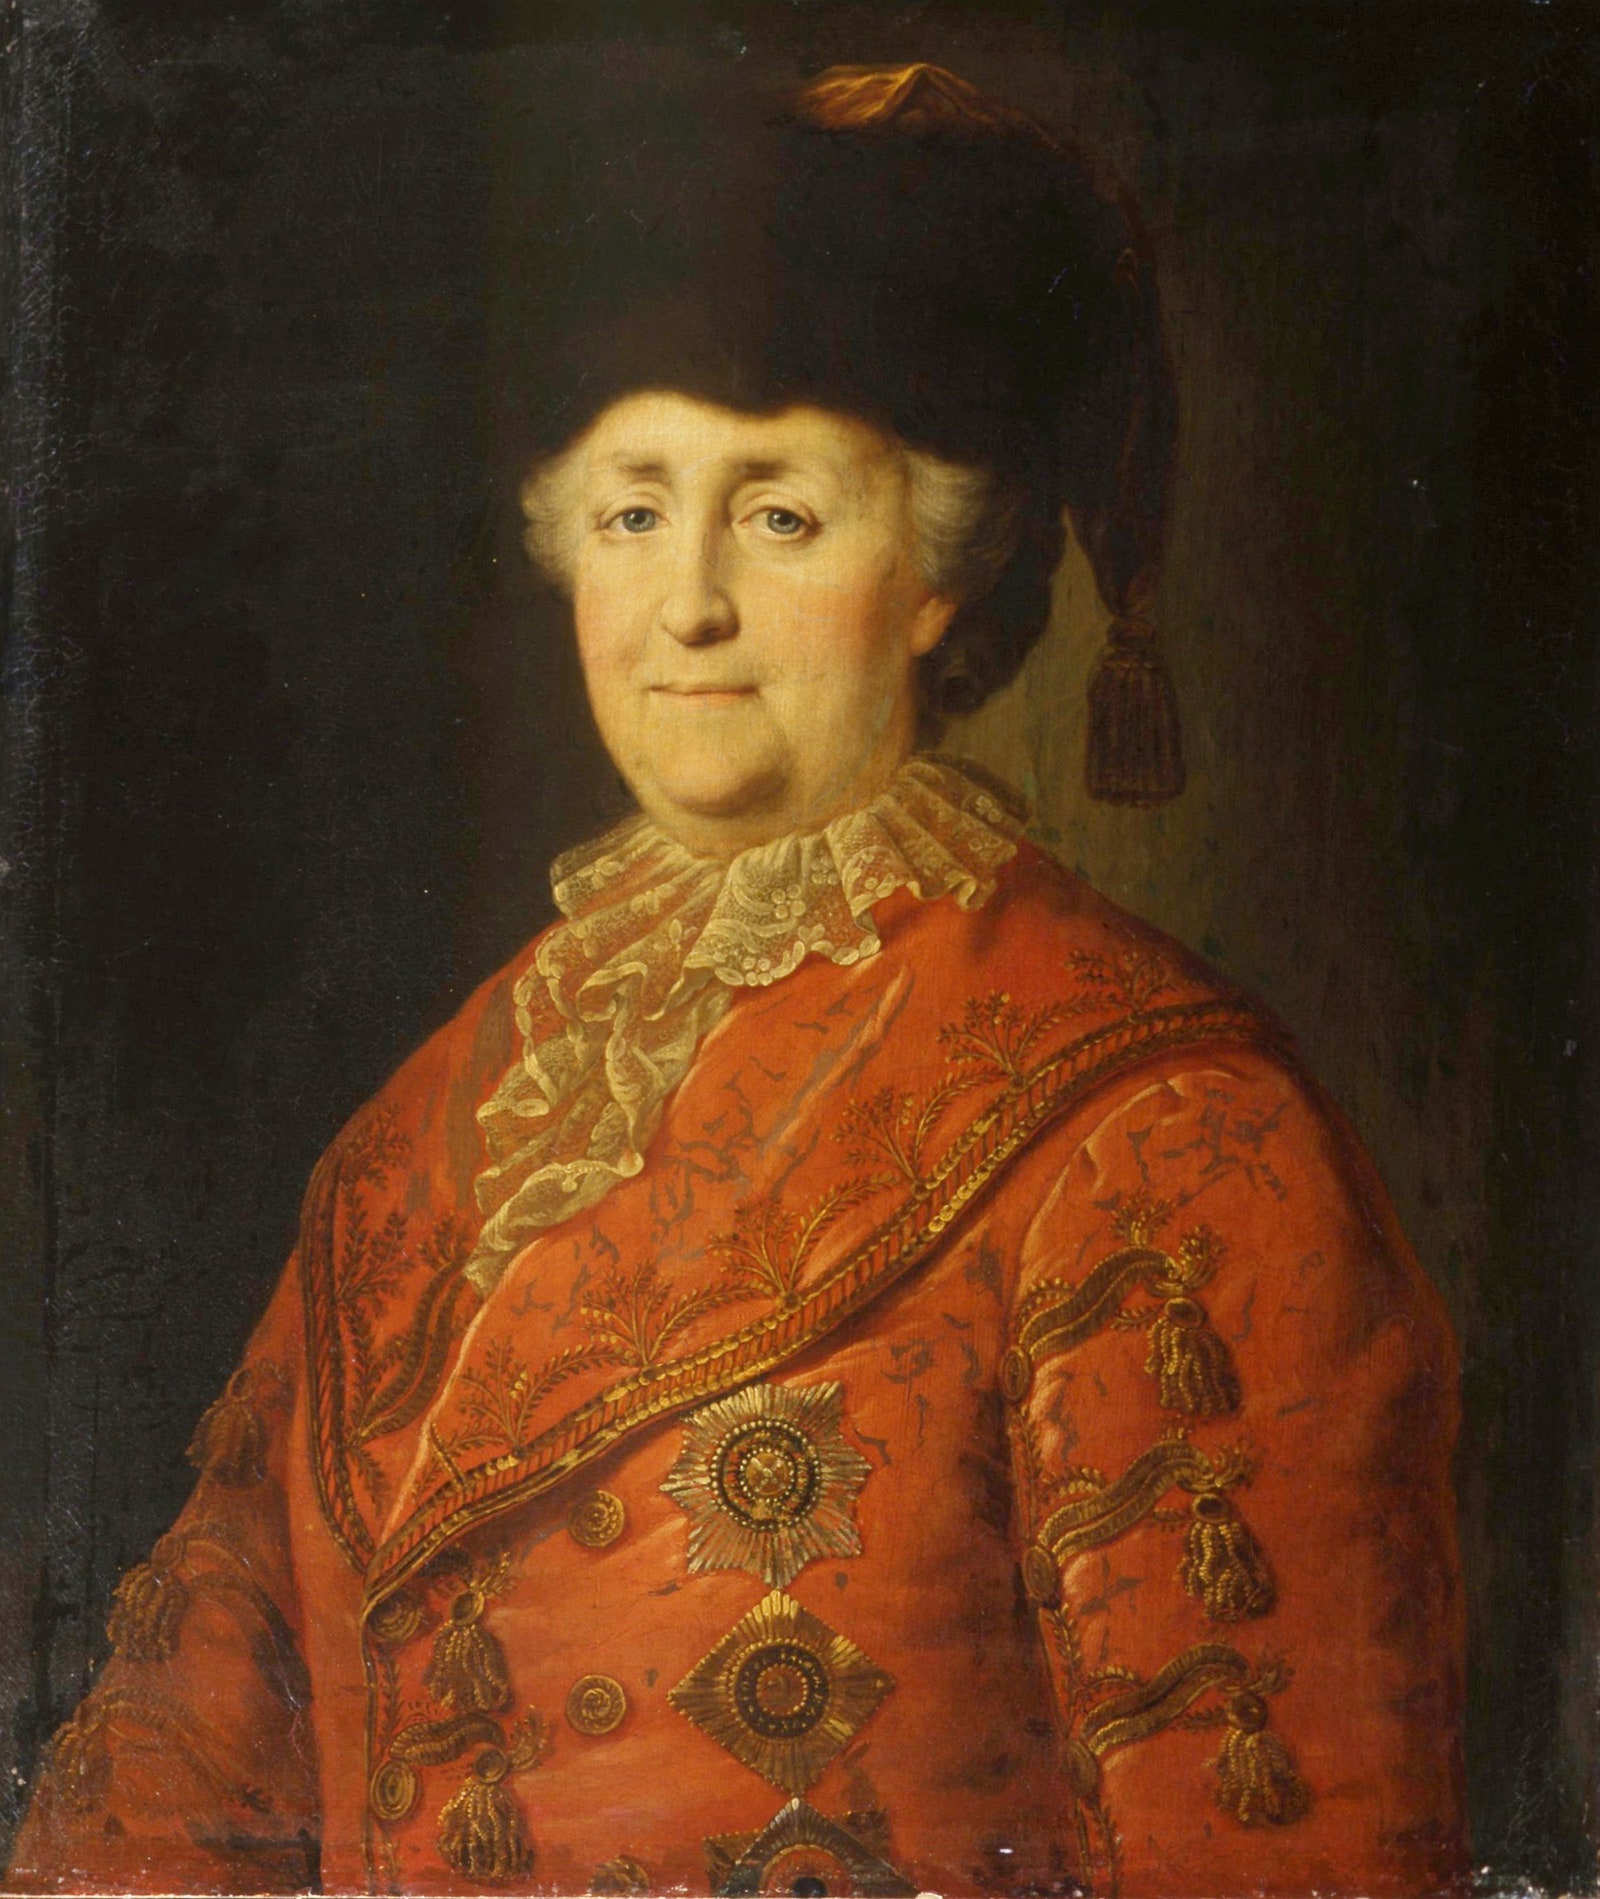 М. Шибанов. Портрет Екатерины II. XVIII век. Холст масло. ГМЗ “Гатчина”.